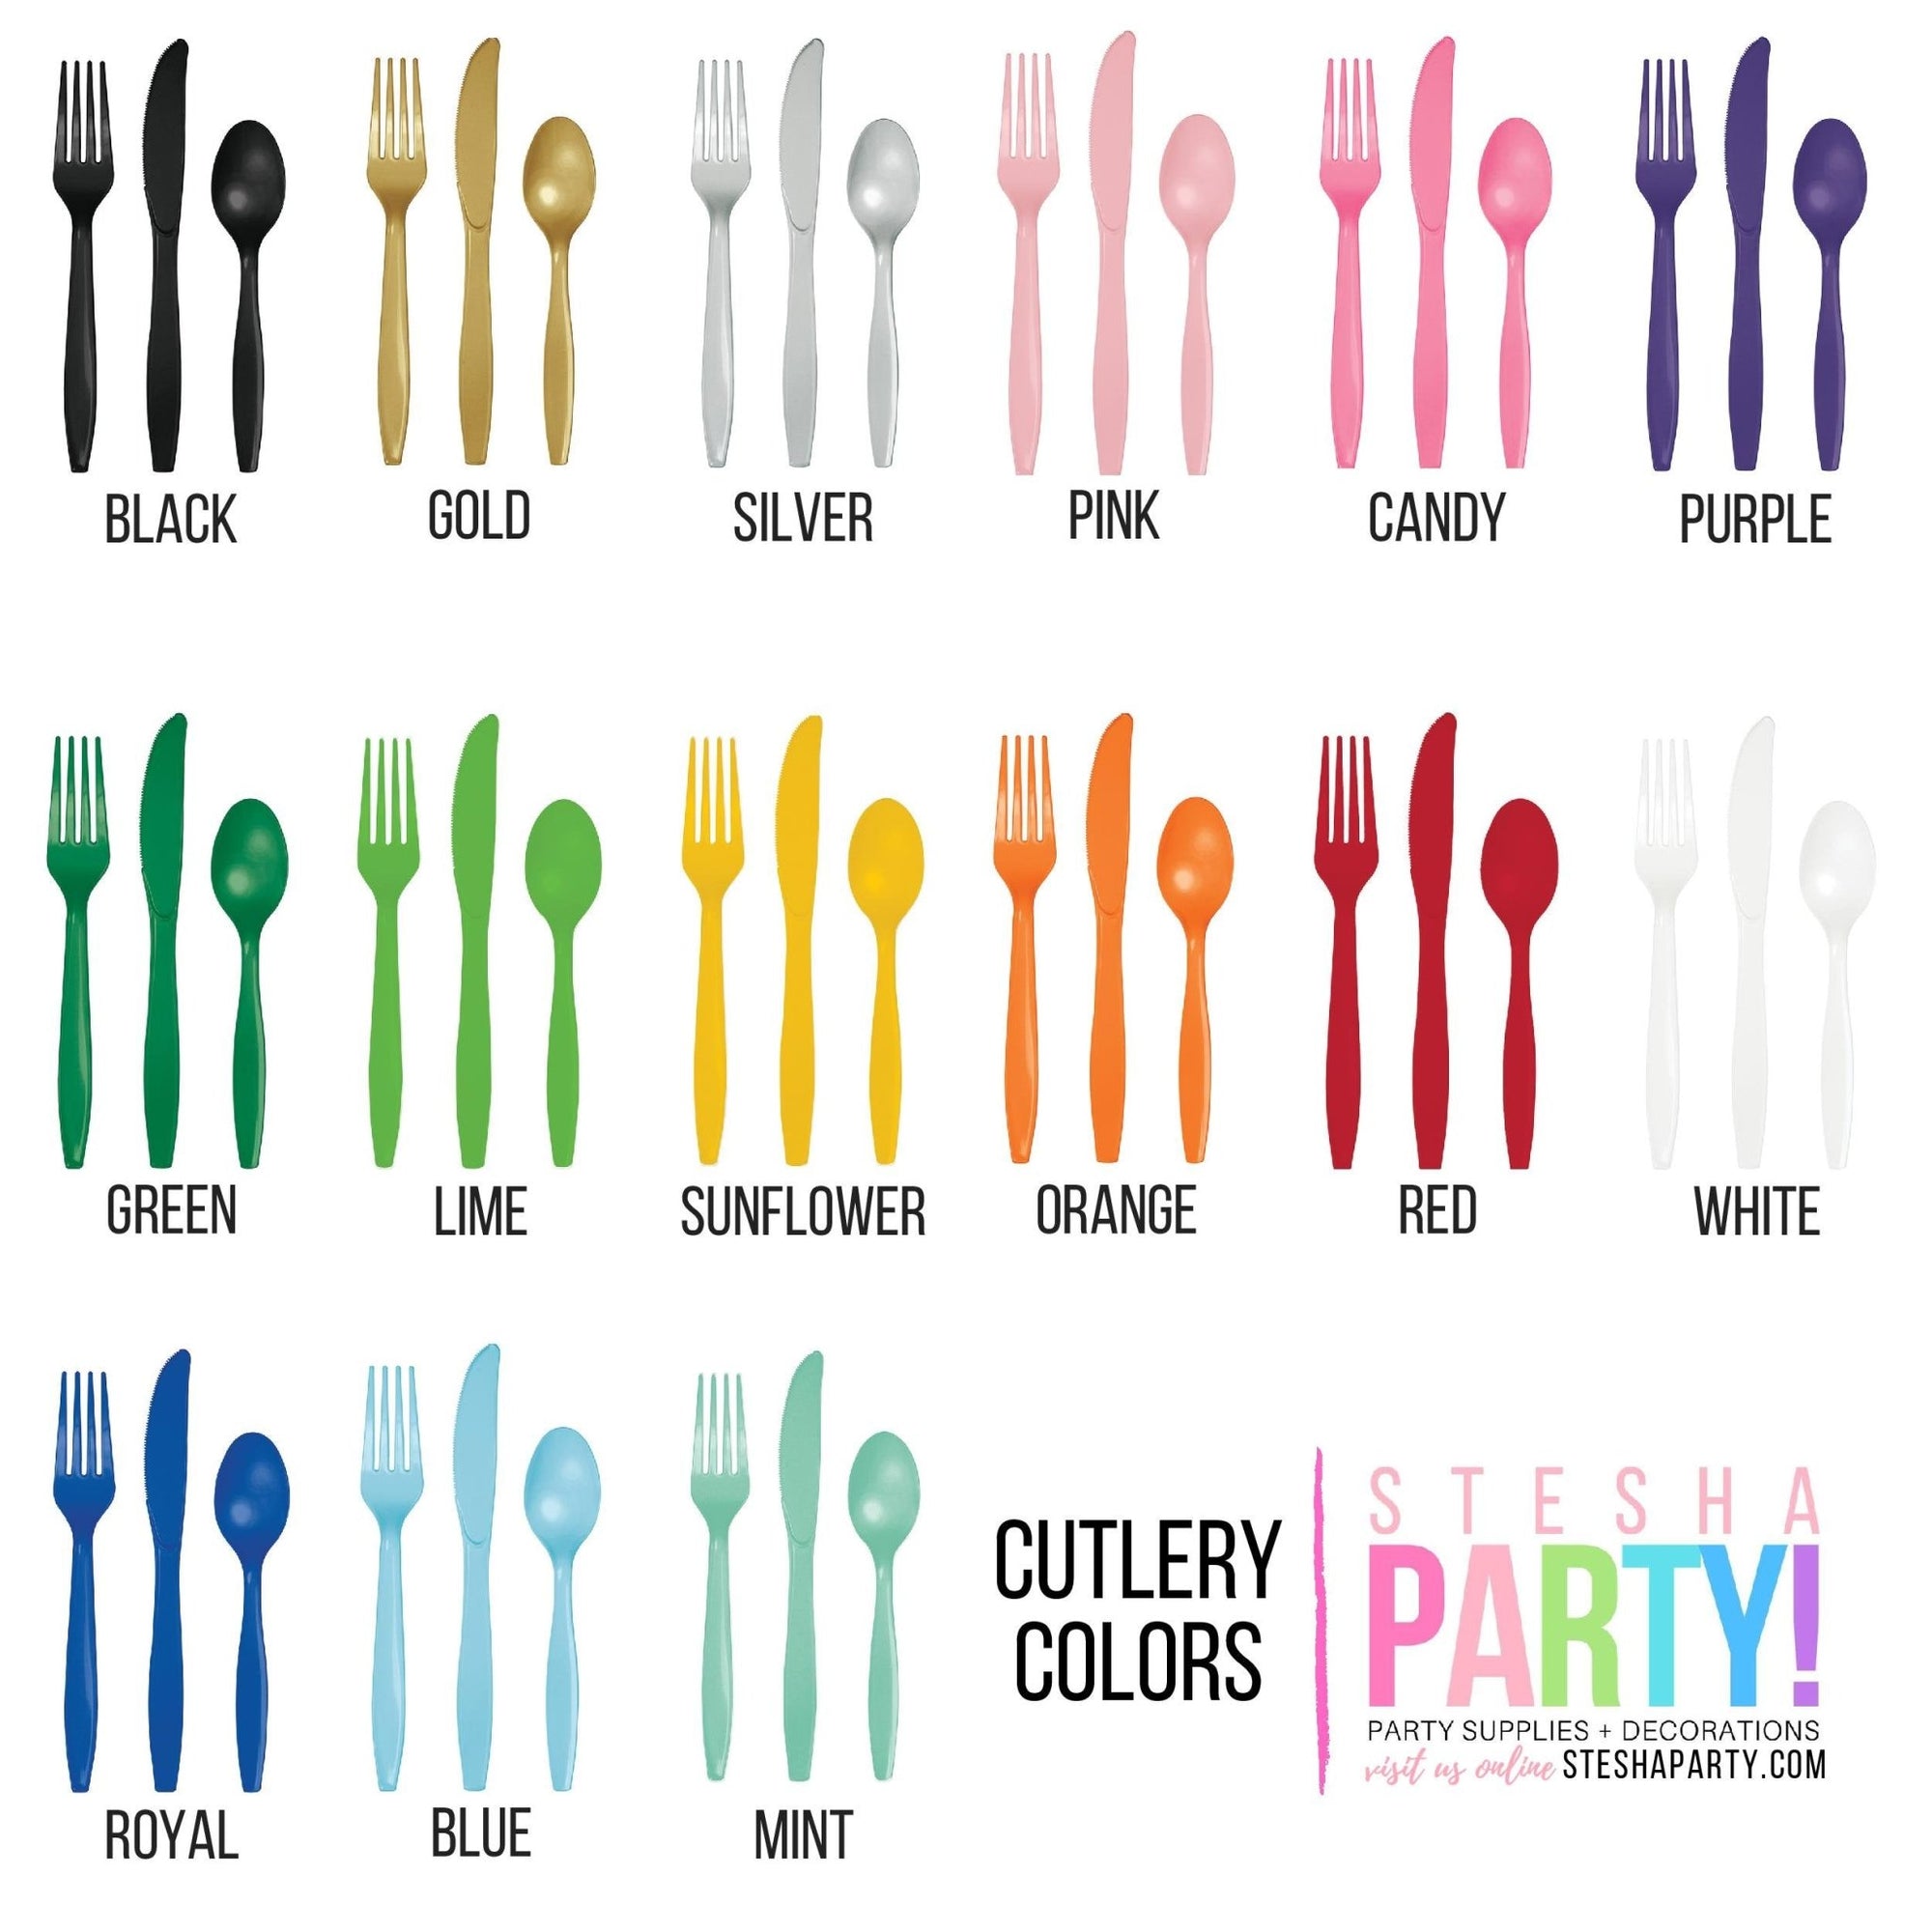 Royal Blue Cutlery - Stesha Party